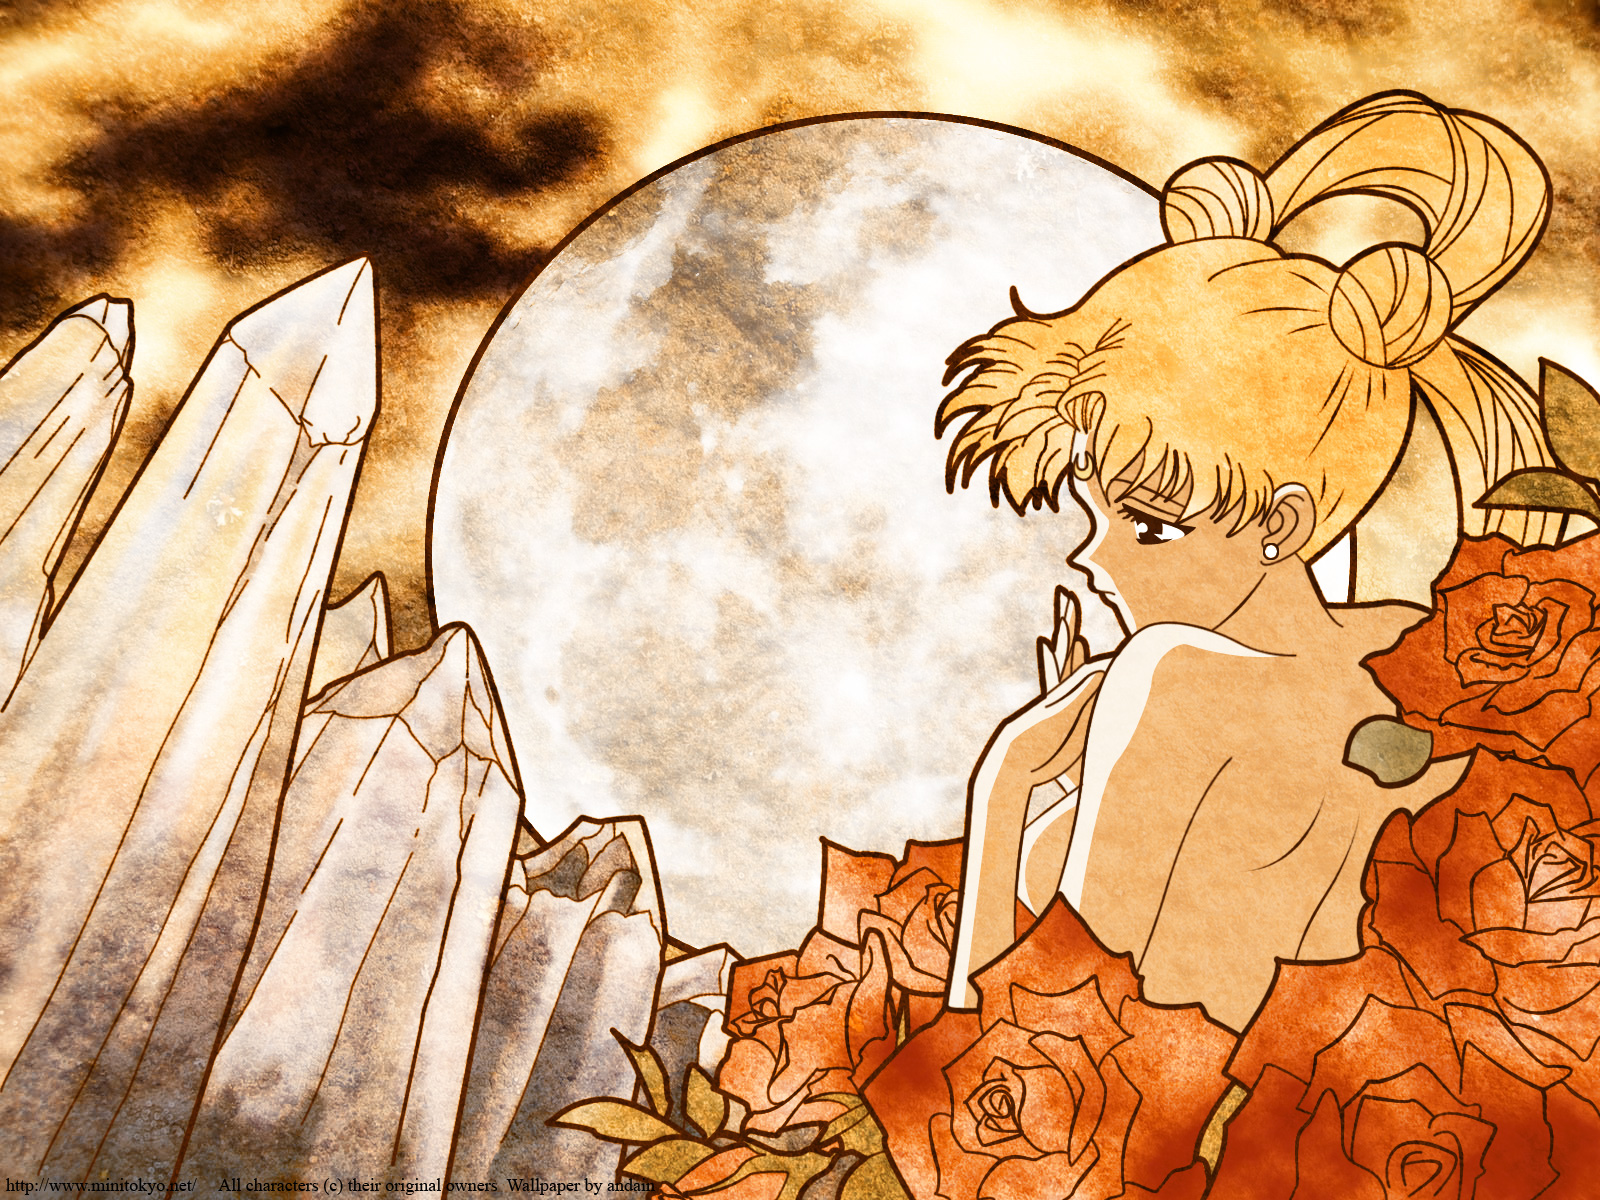 Sailor Moon anime character in a captivating desktop wallpaper